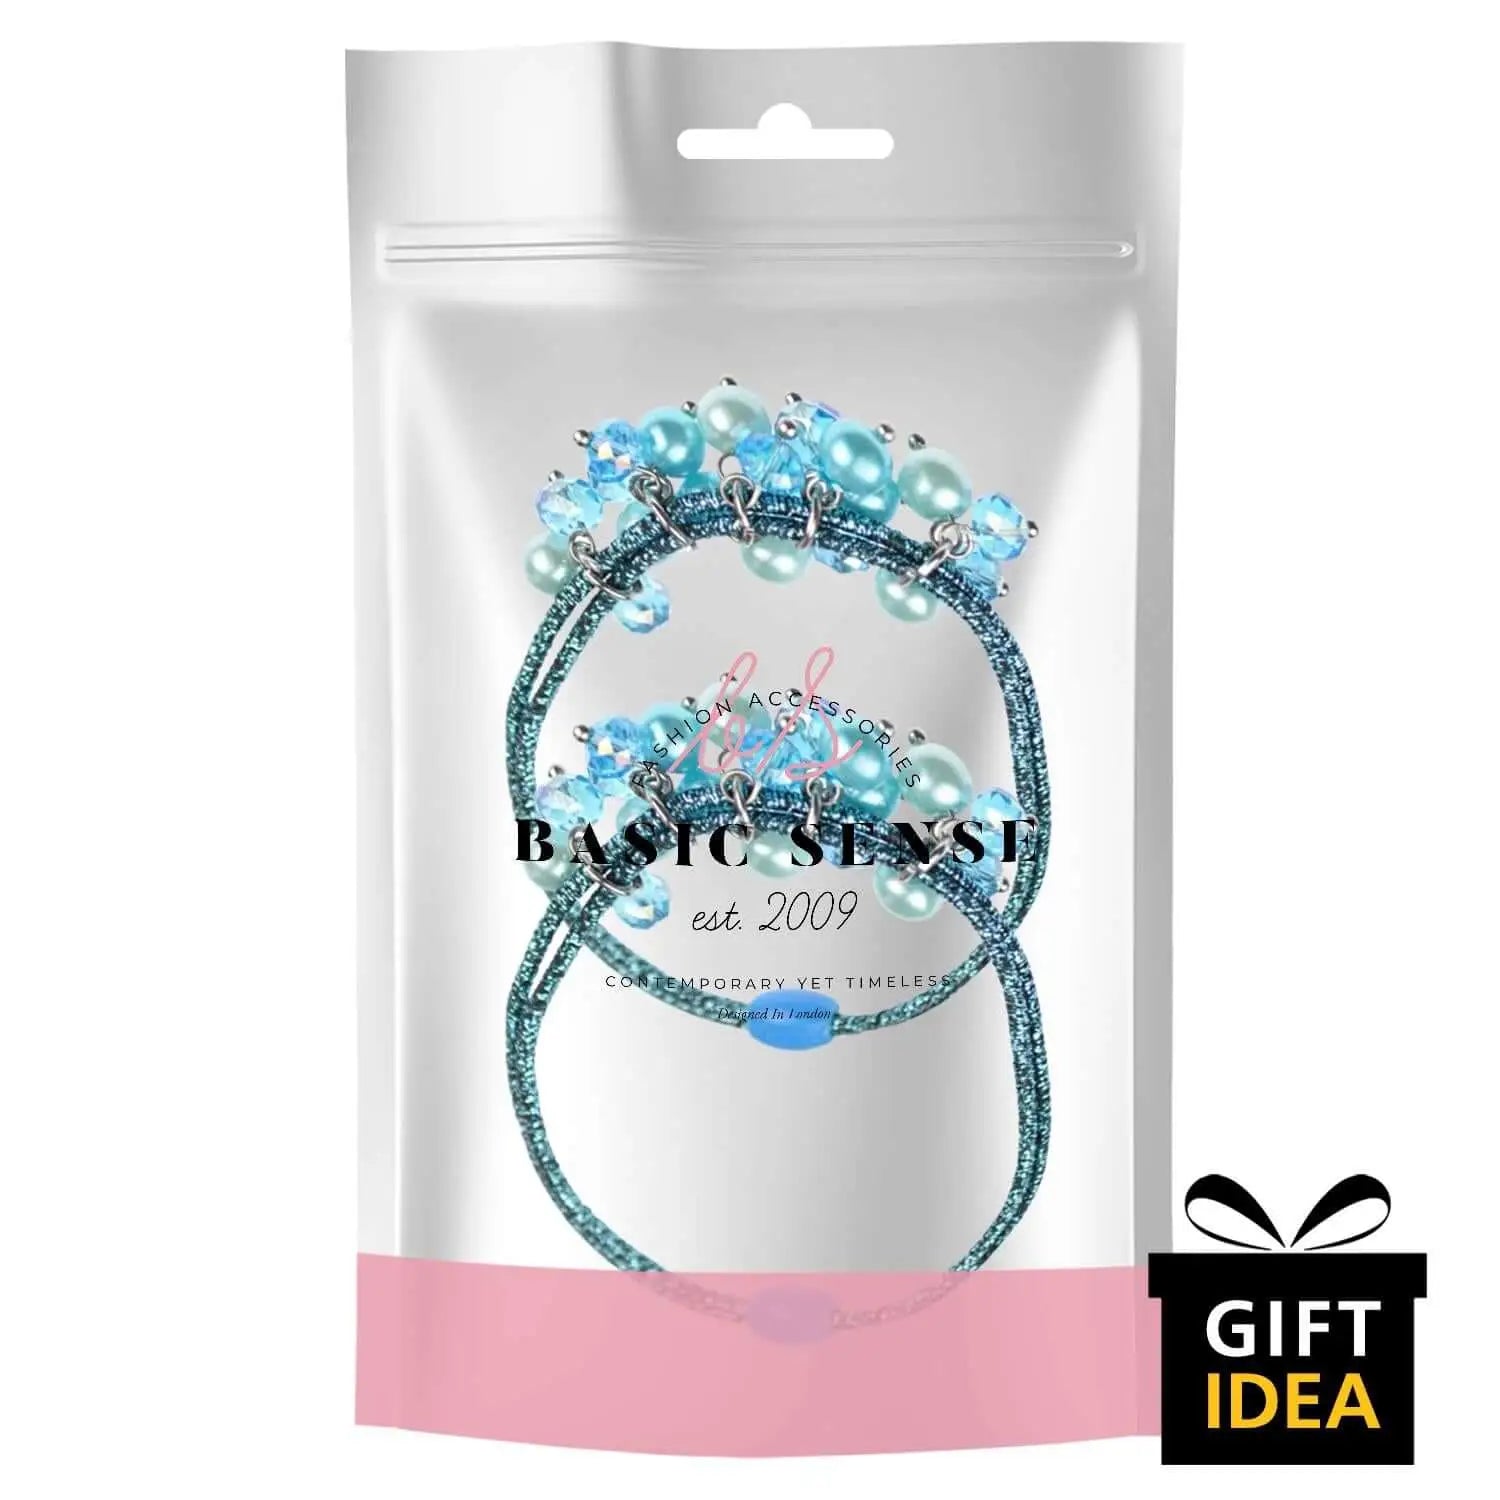 White bag with pink ribbon, blue bracelet - Floral & Beaded Metallic Elastic Bobbles - Durable Double Elastic Hair Bands